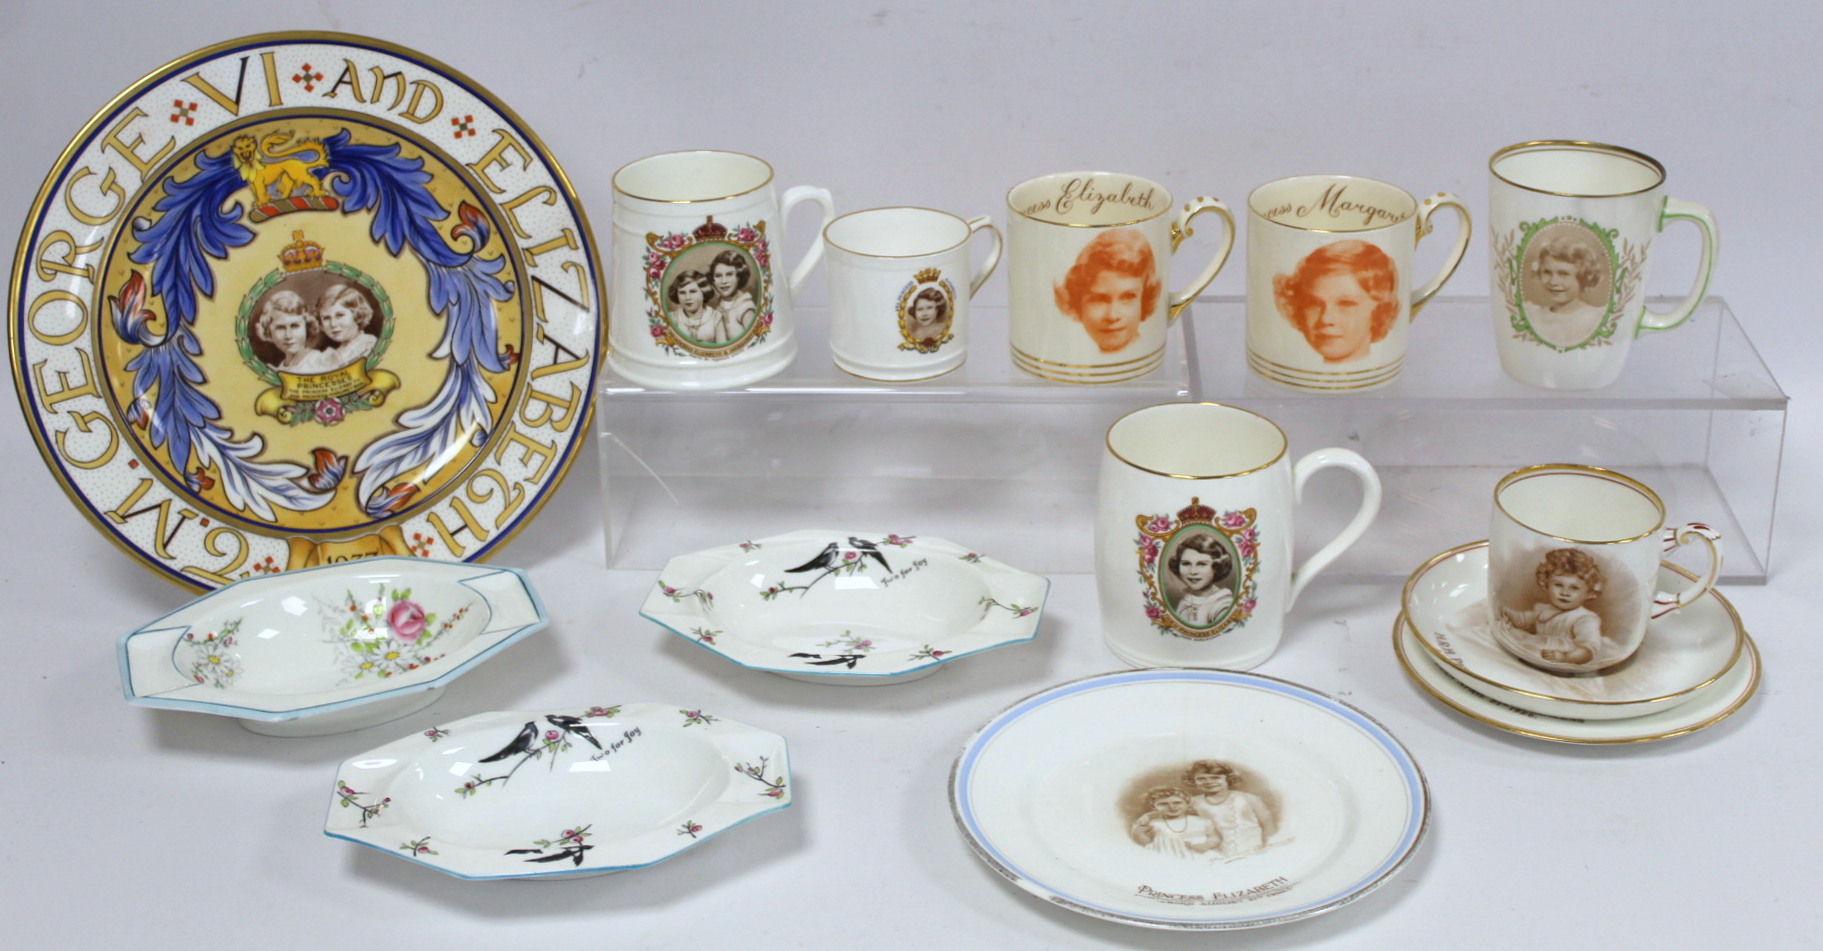 Collection of commemorative ware for Princess Elizabeth and Princess Margaret, comprising: Paragon